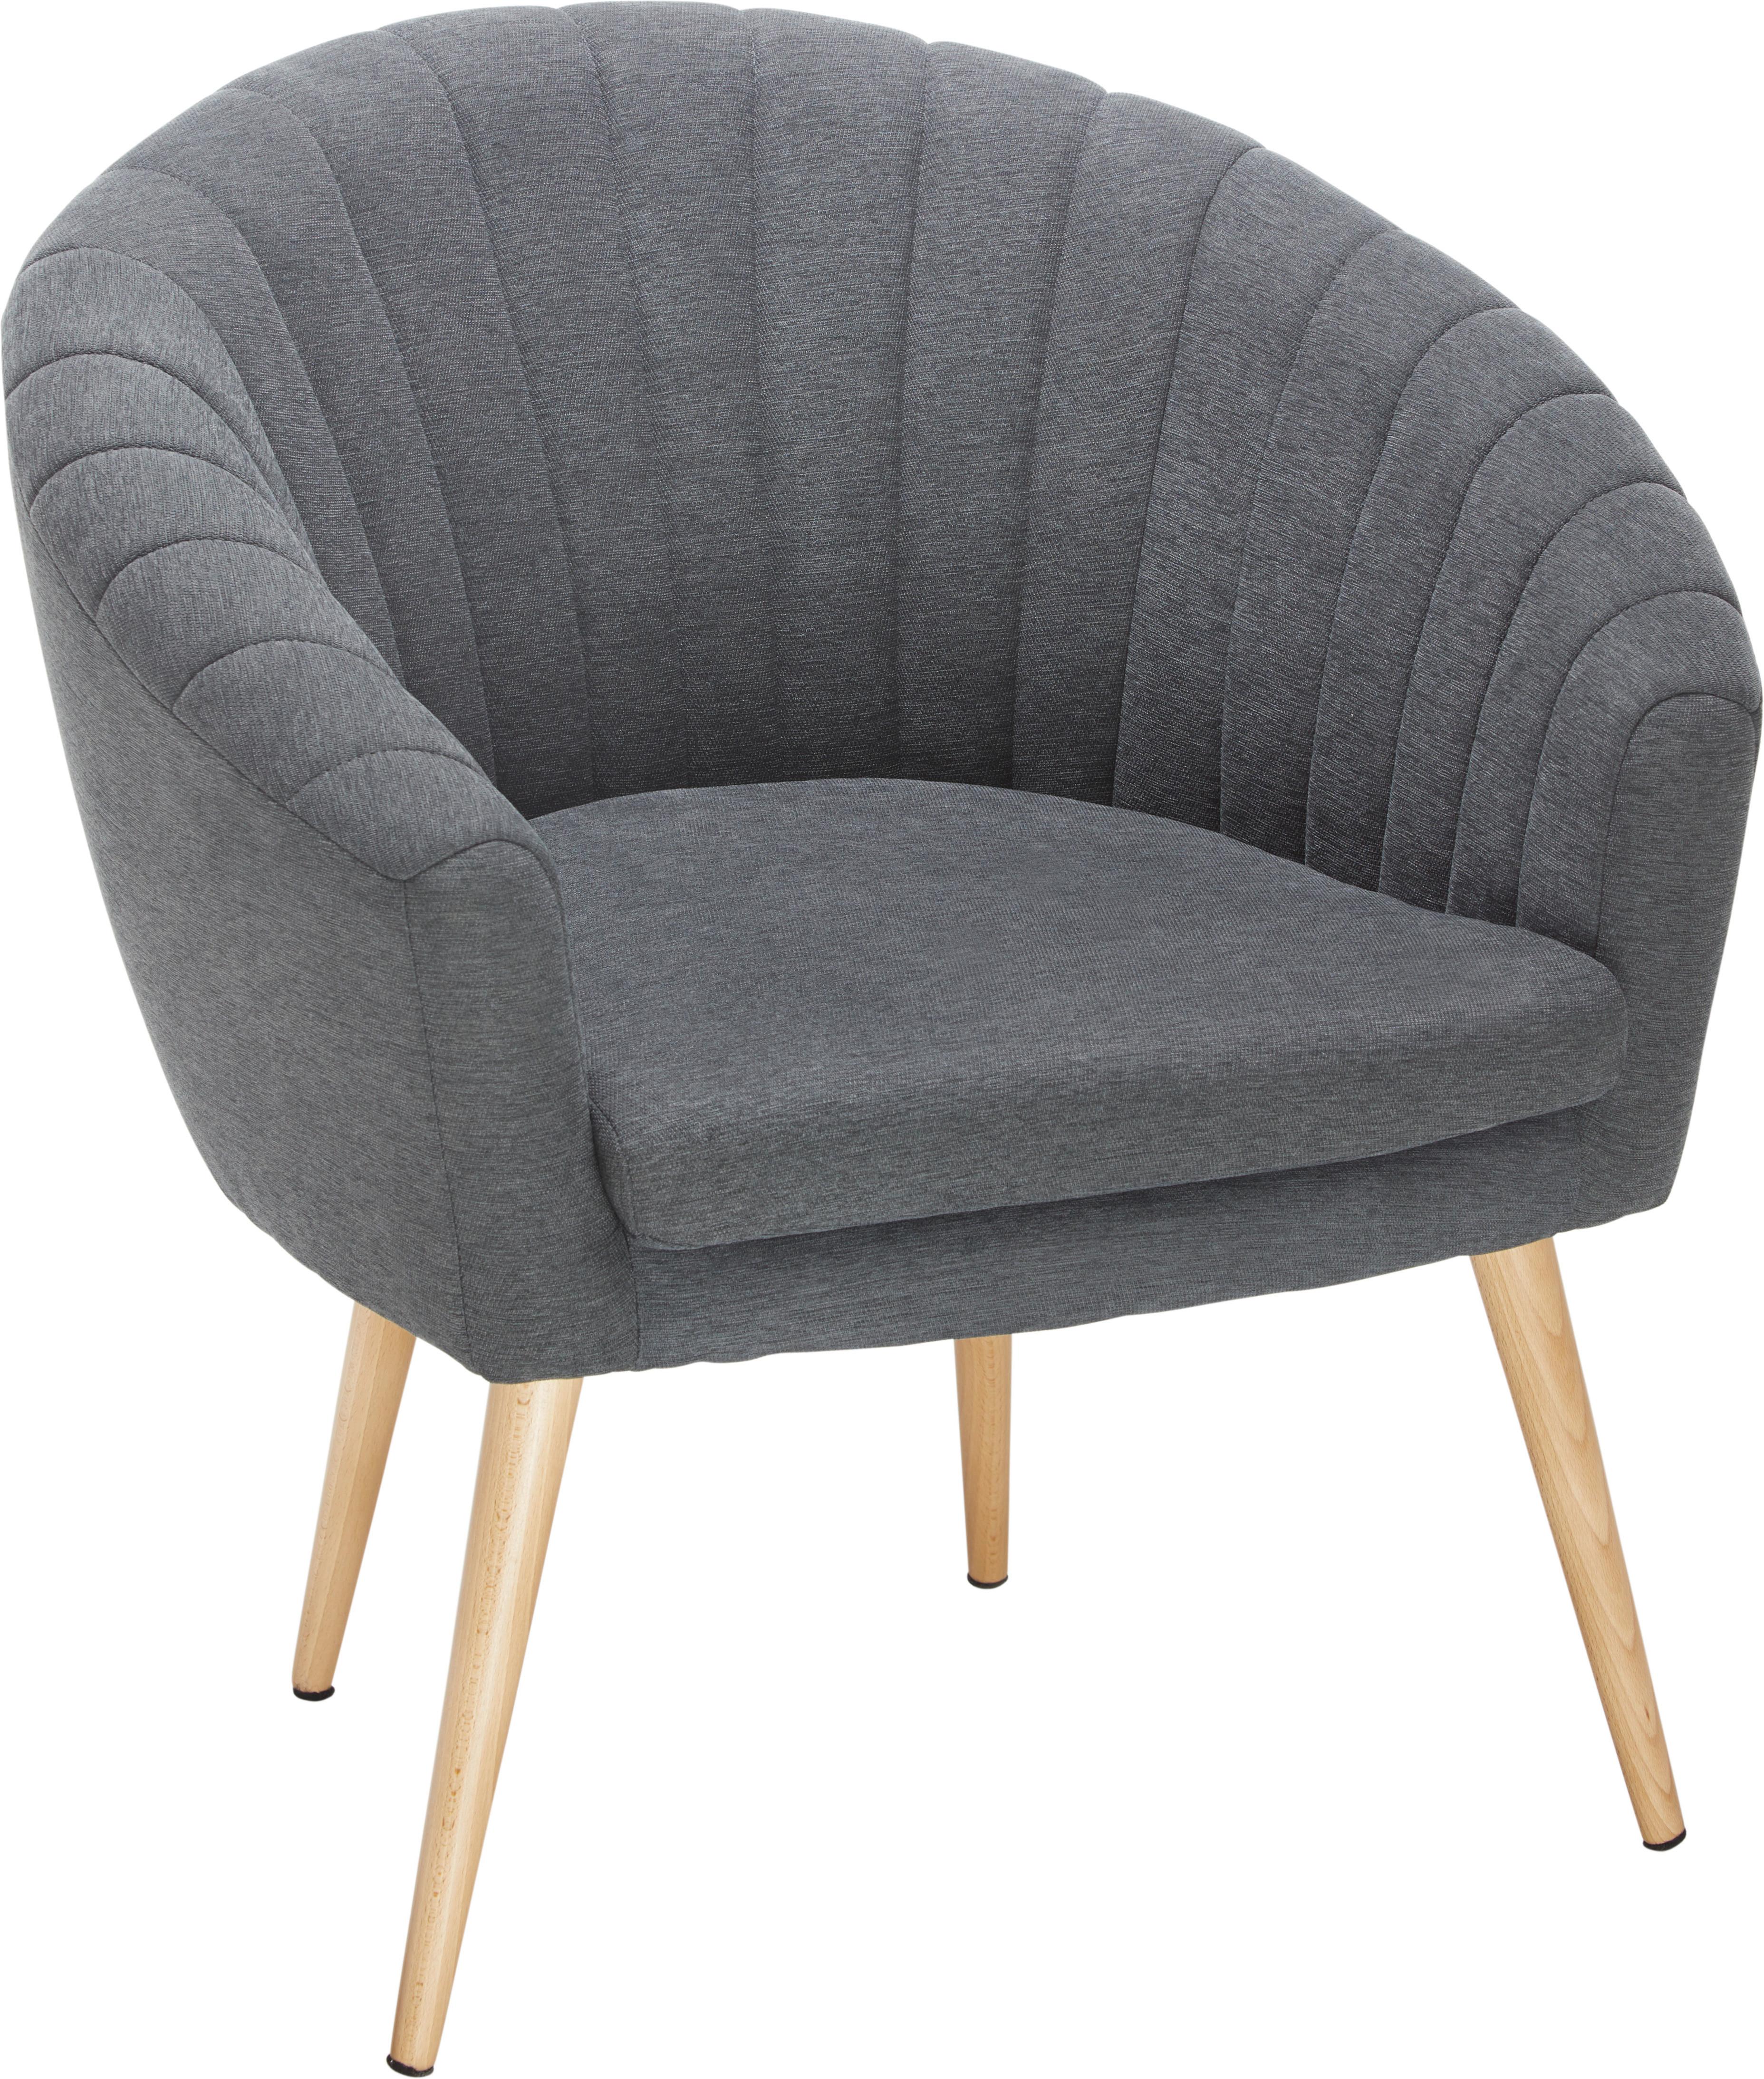 Fotelja Bea - tamno siva/prirodne boje, Design, tekstil (75/77/66cm) - Modern Living